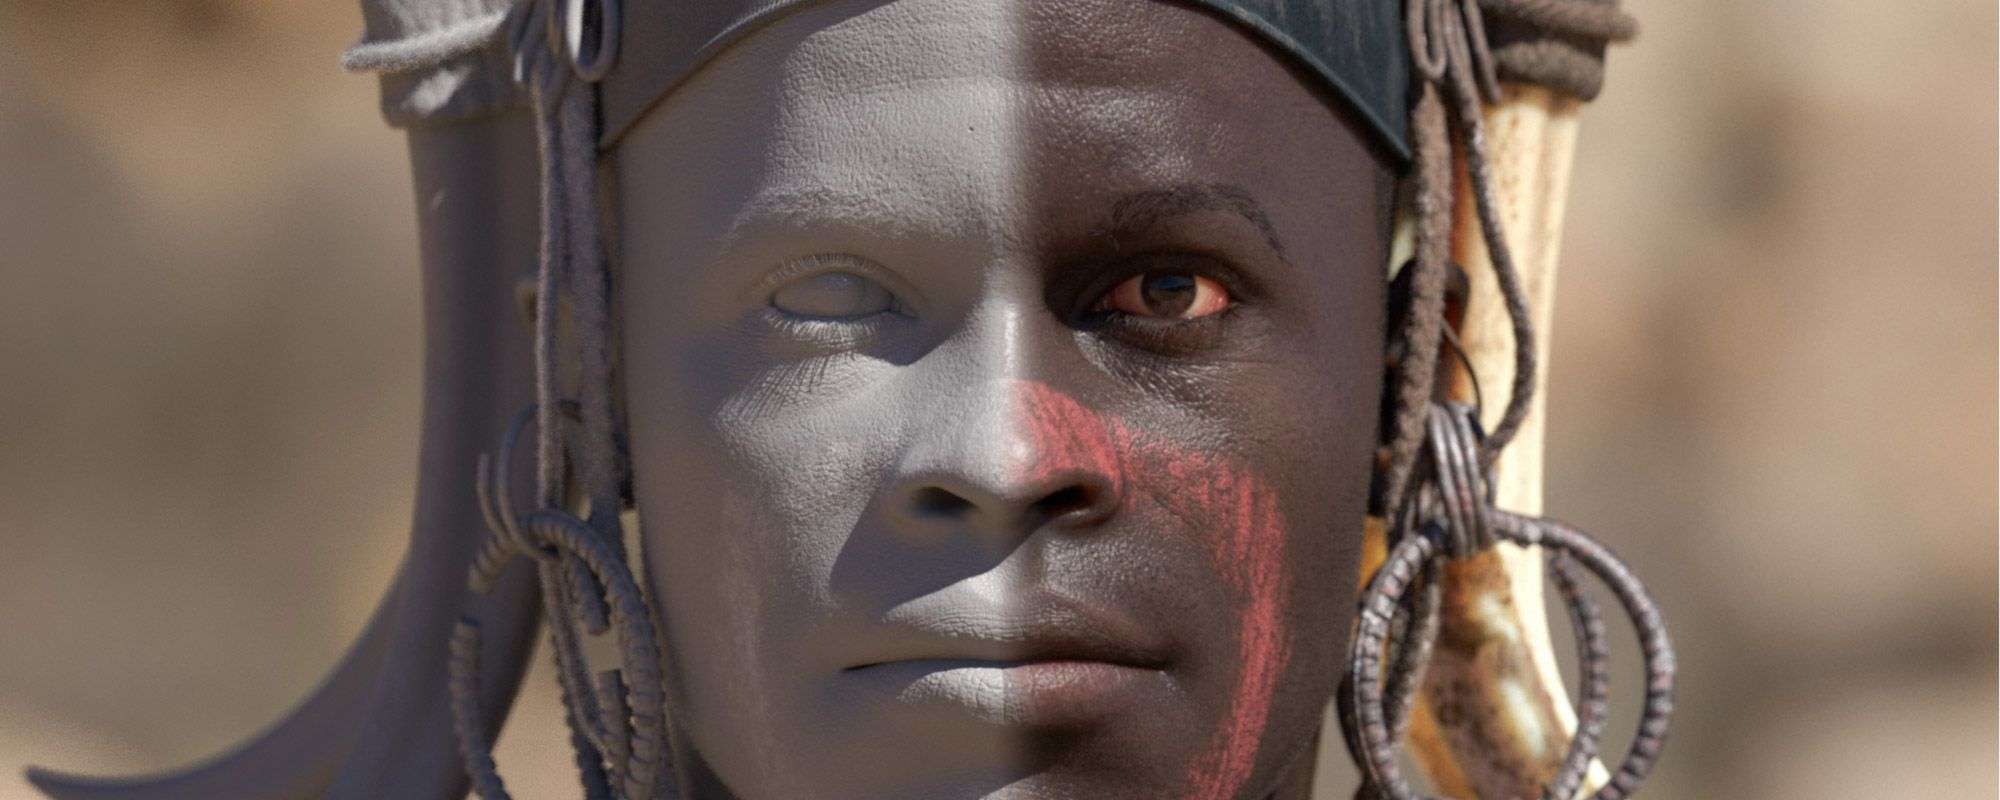 Photorealistic 3d Character Design Process Mursi Tribe Portrait